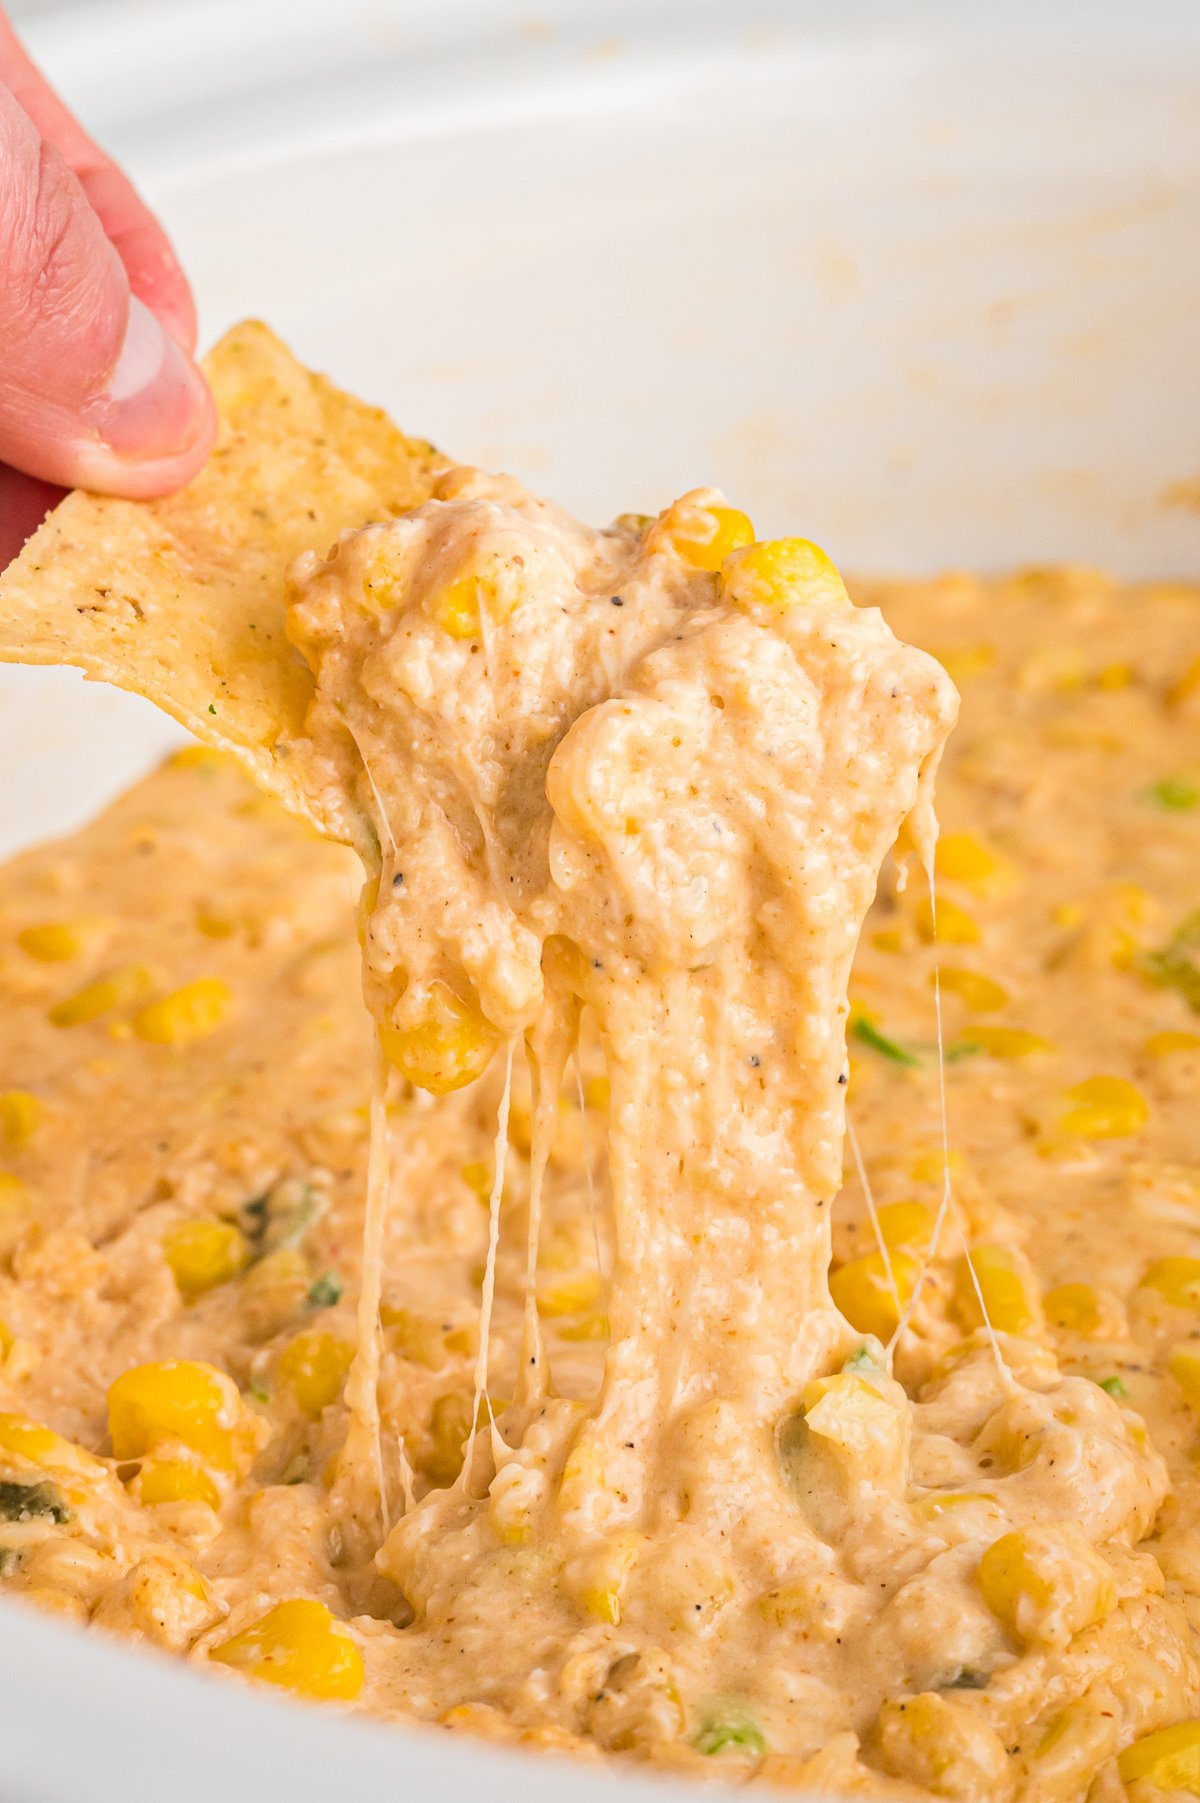 Cheesy corn dip on a chip.